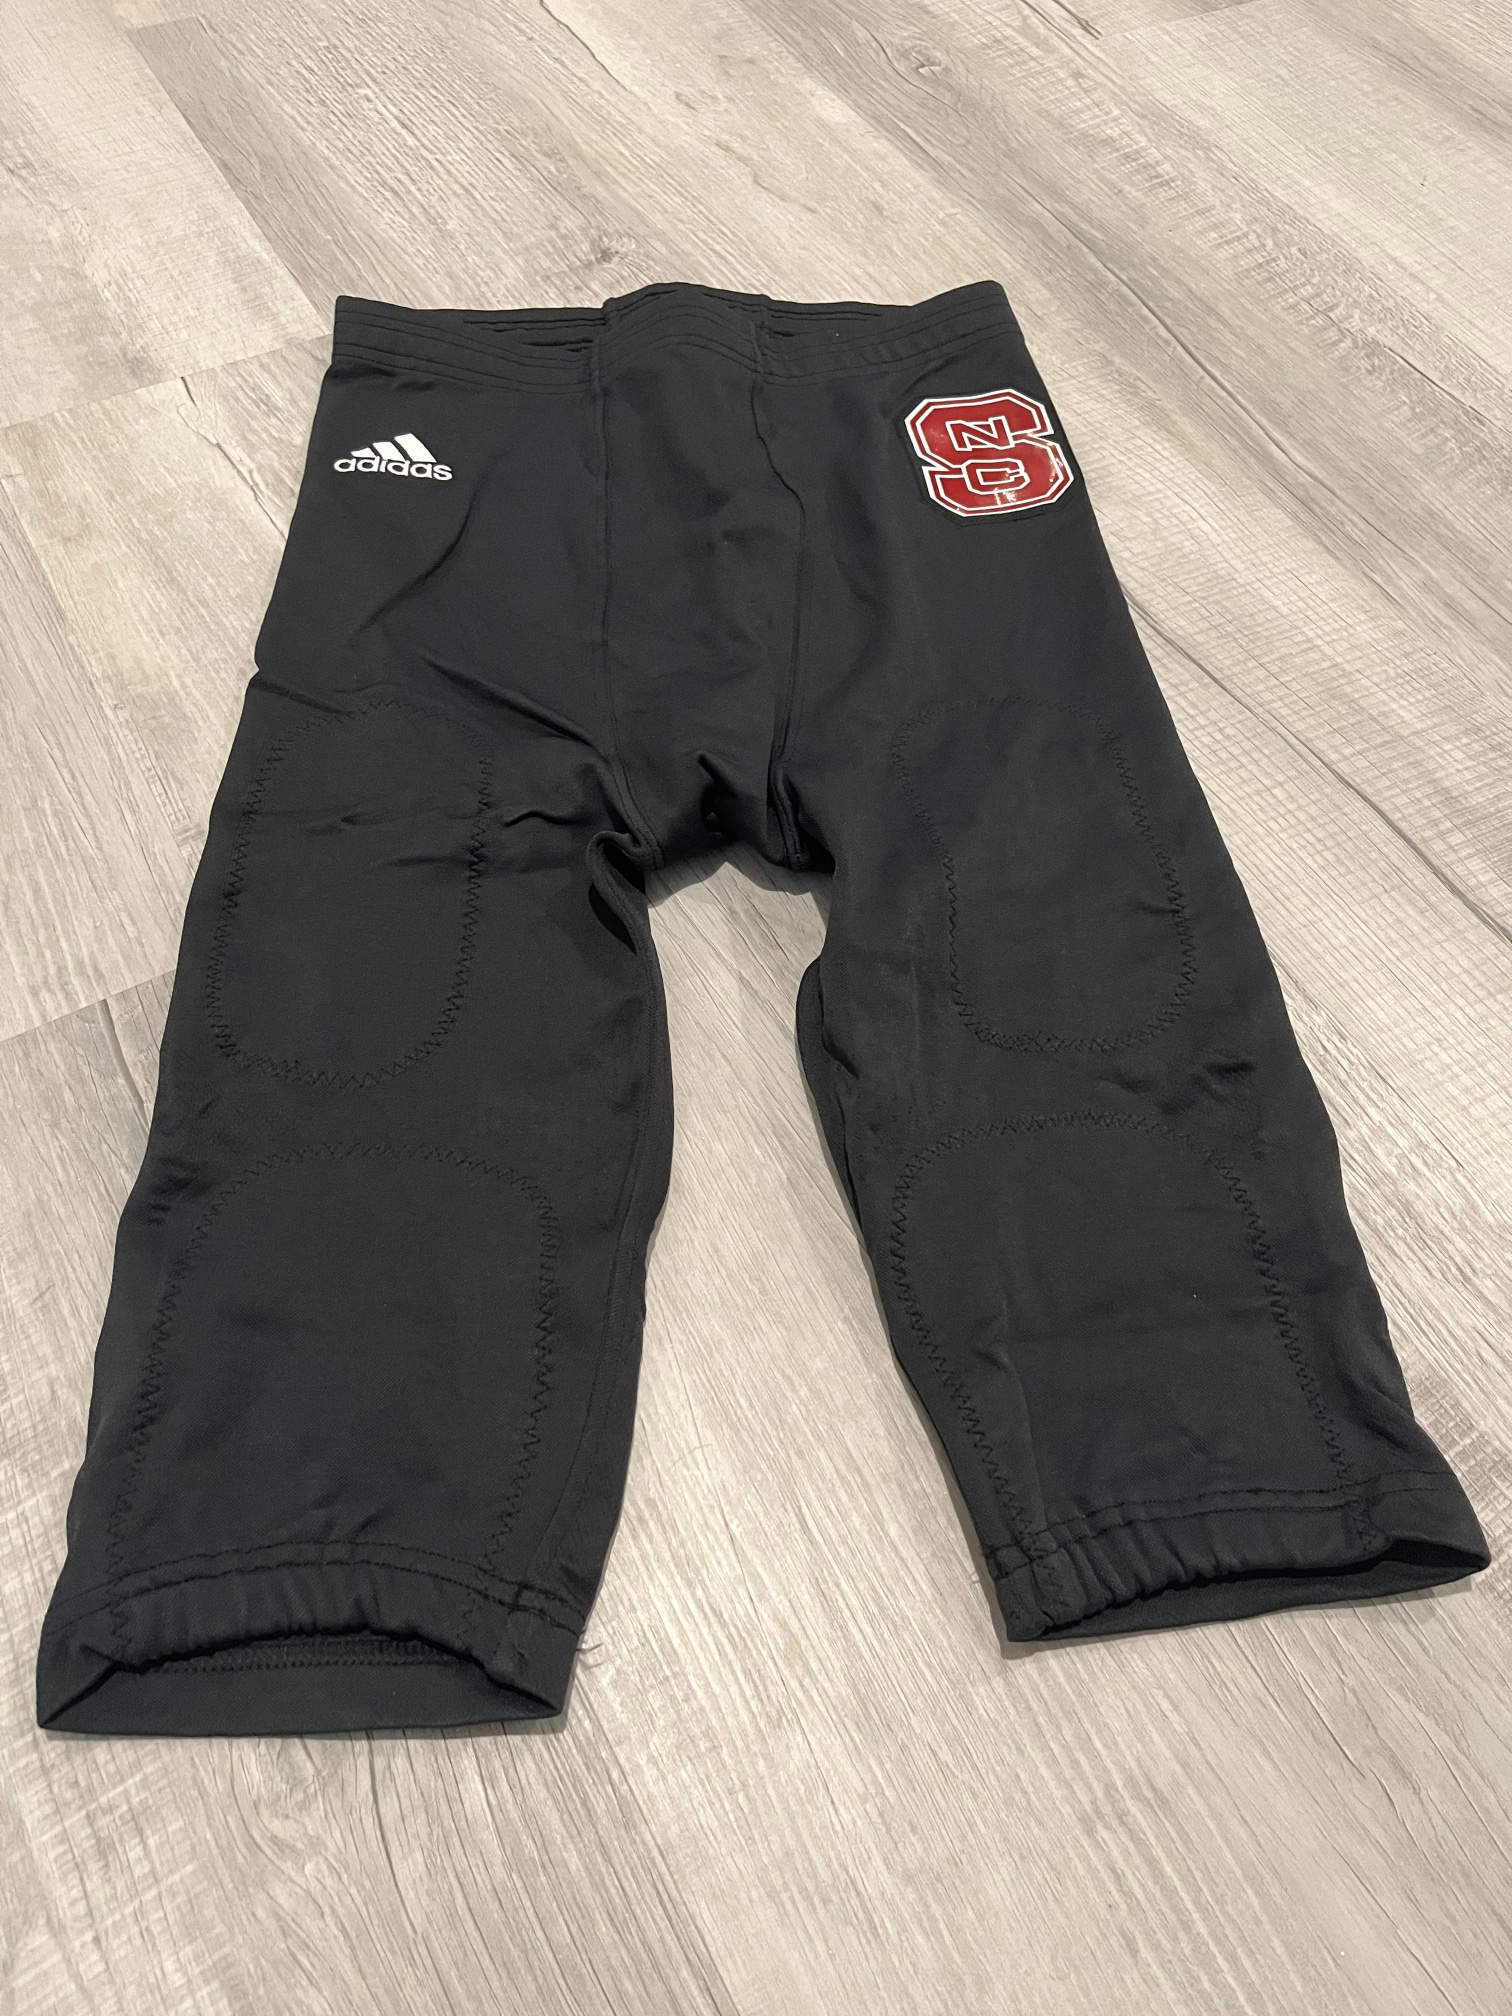 Adidas Football Practice Pants Black NC State Logo Large